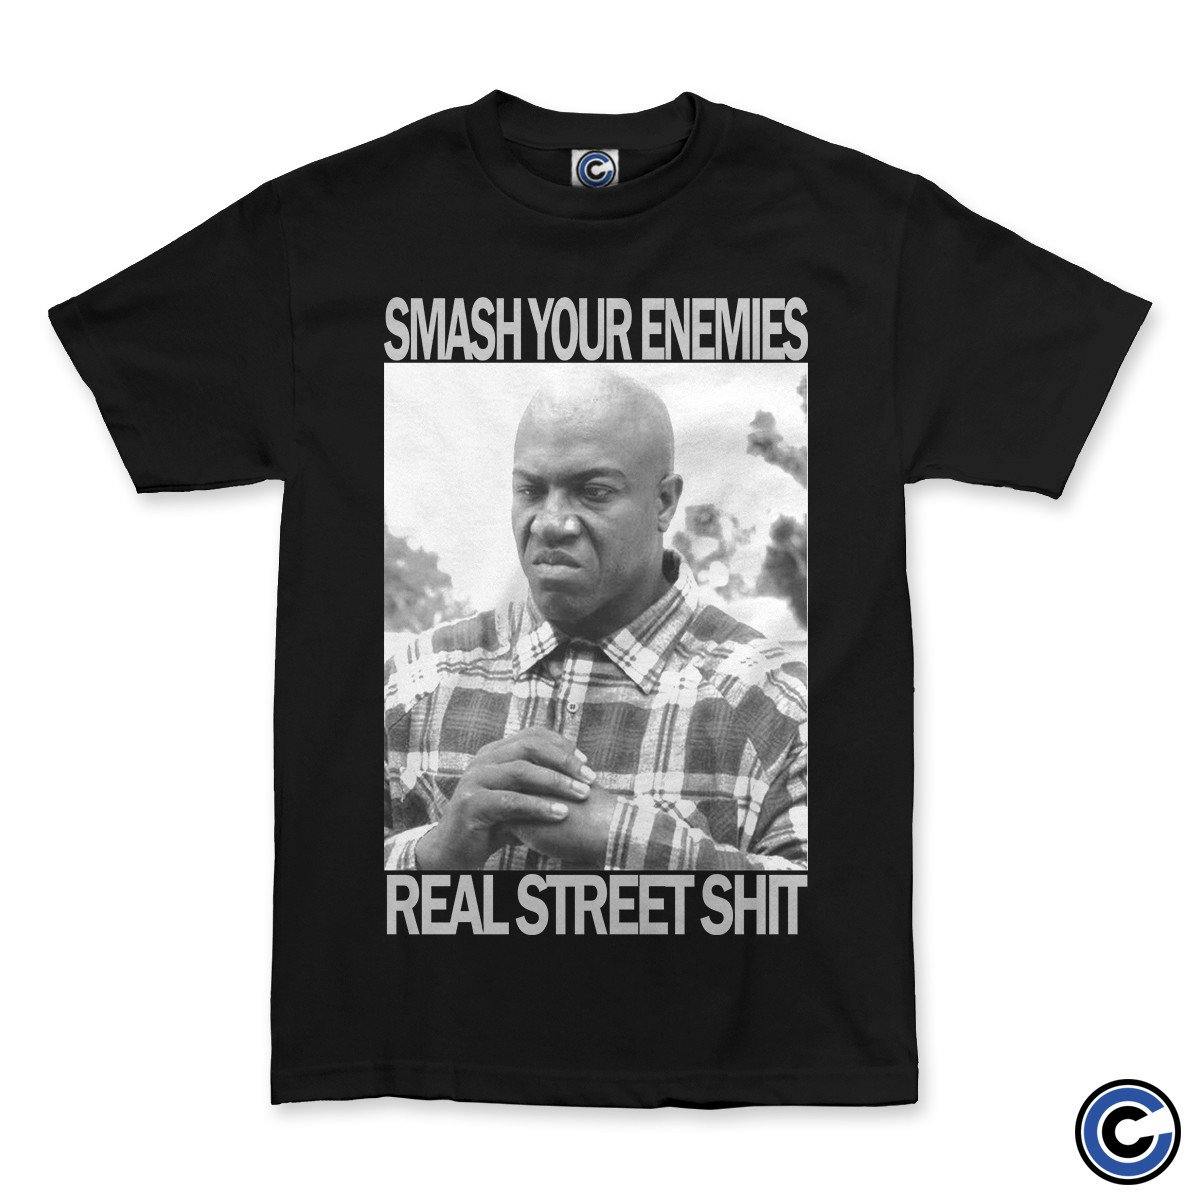 Buy – Smash Your Enemies "Real Street Shit" Shirt – Band & Music Merch – Cold Cuts Merch